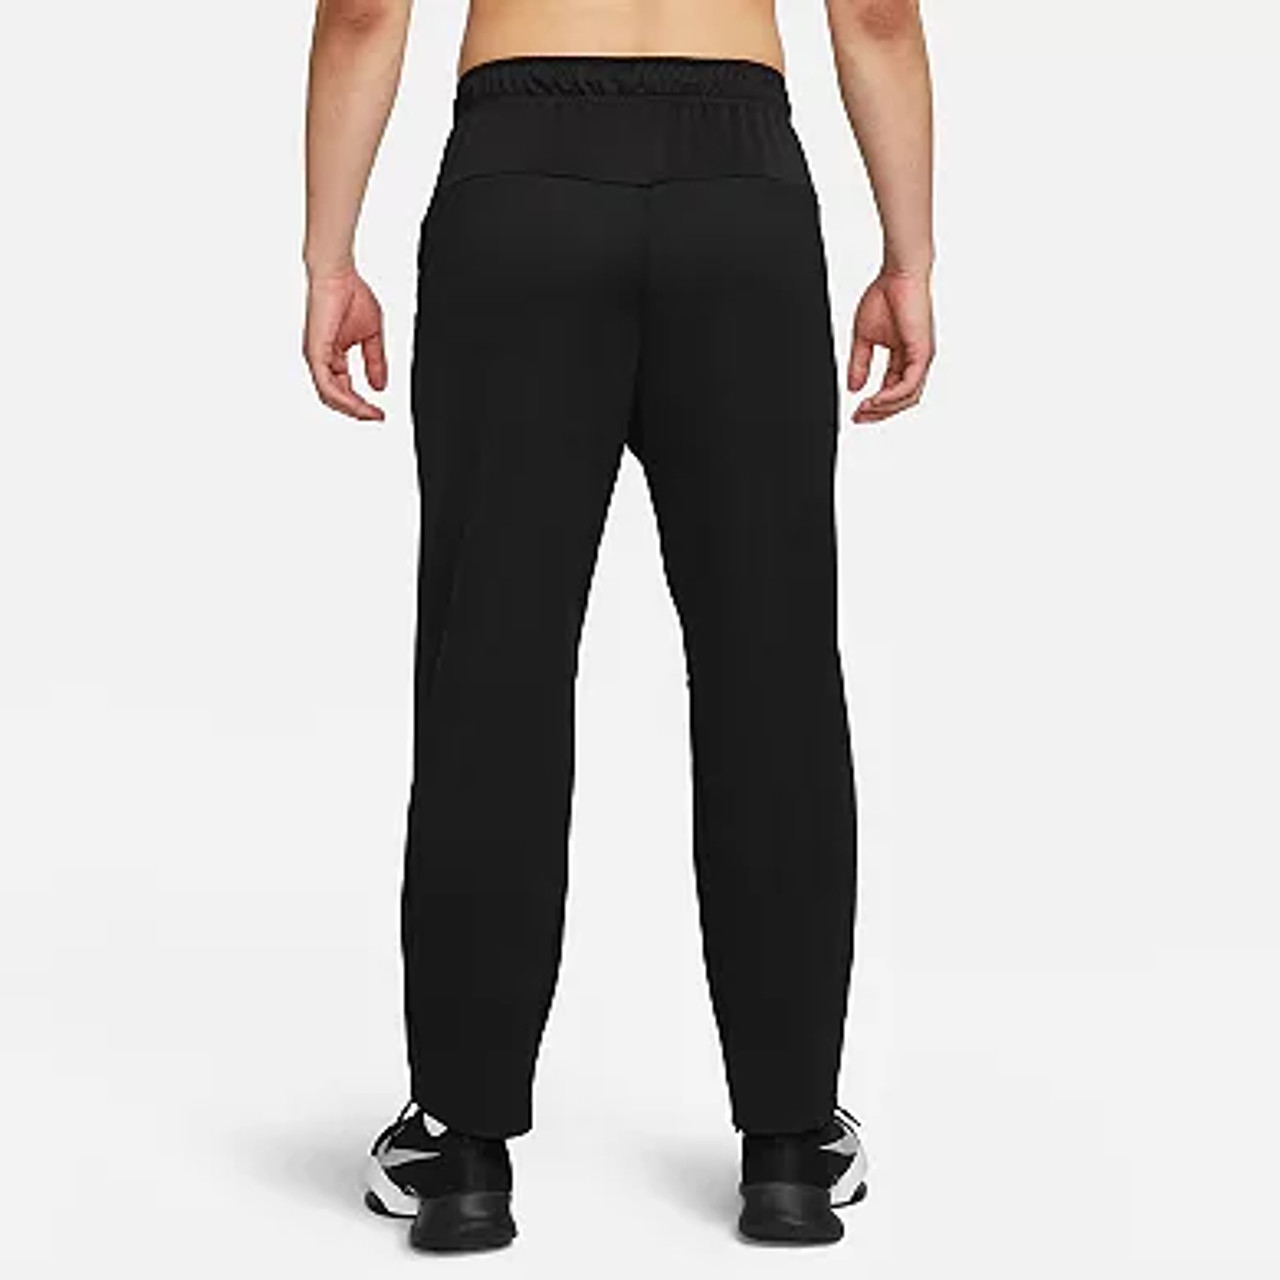 Nike Yoga Pant - Men's 